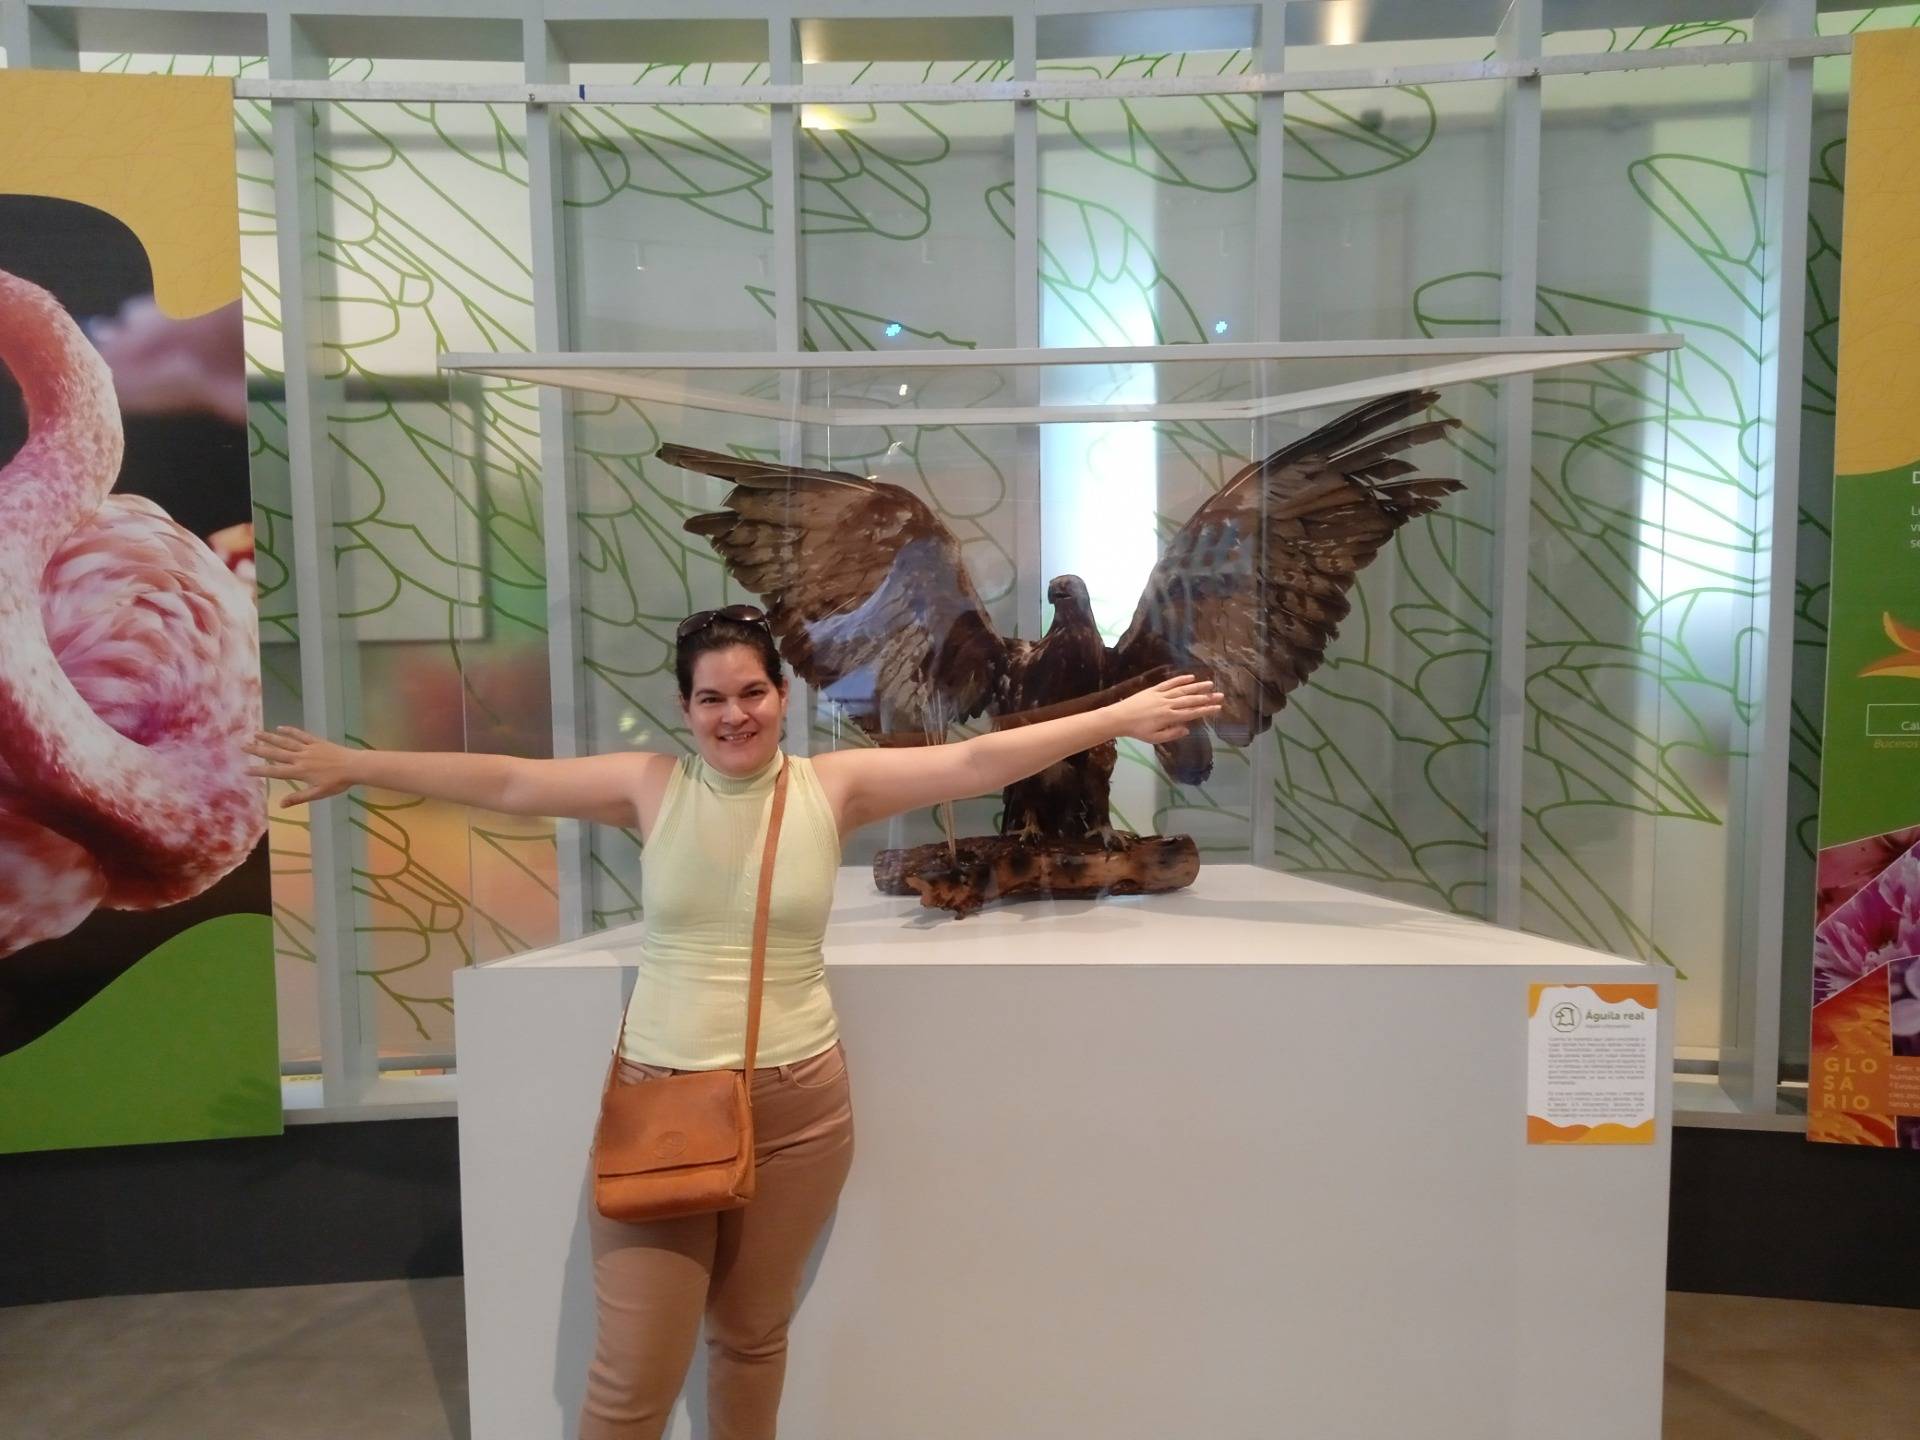 A golden eagle specimen, wingspan can be apreciated